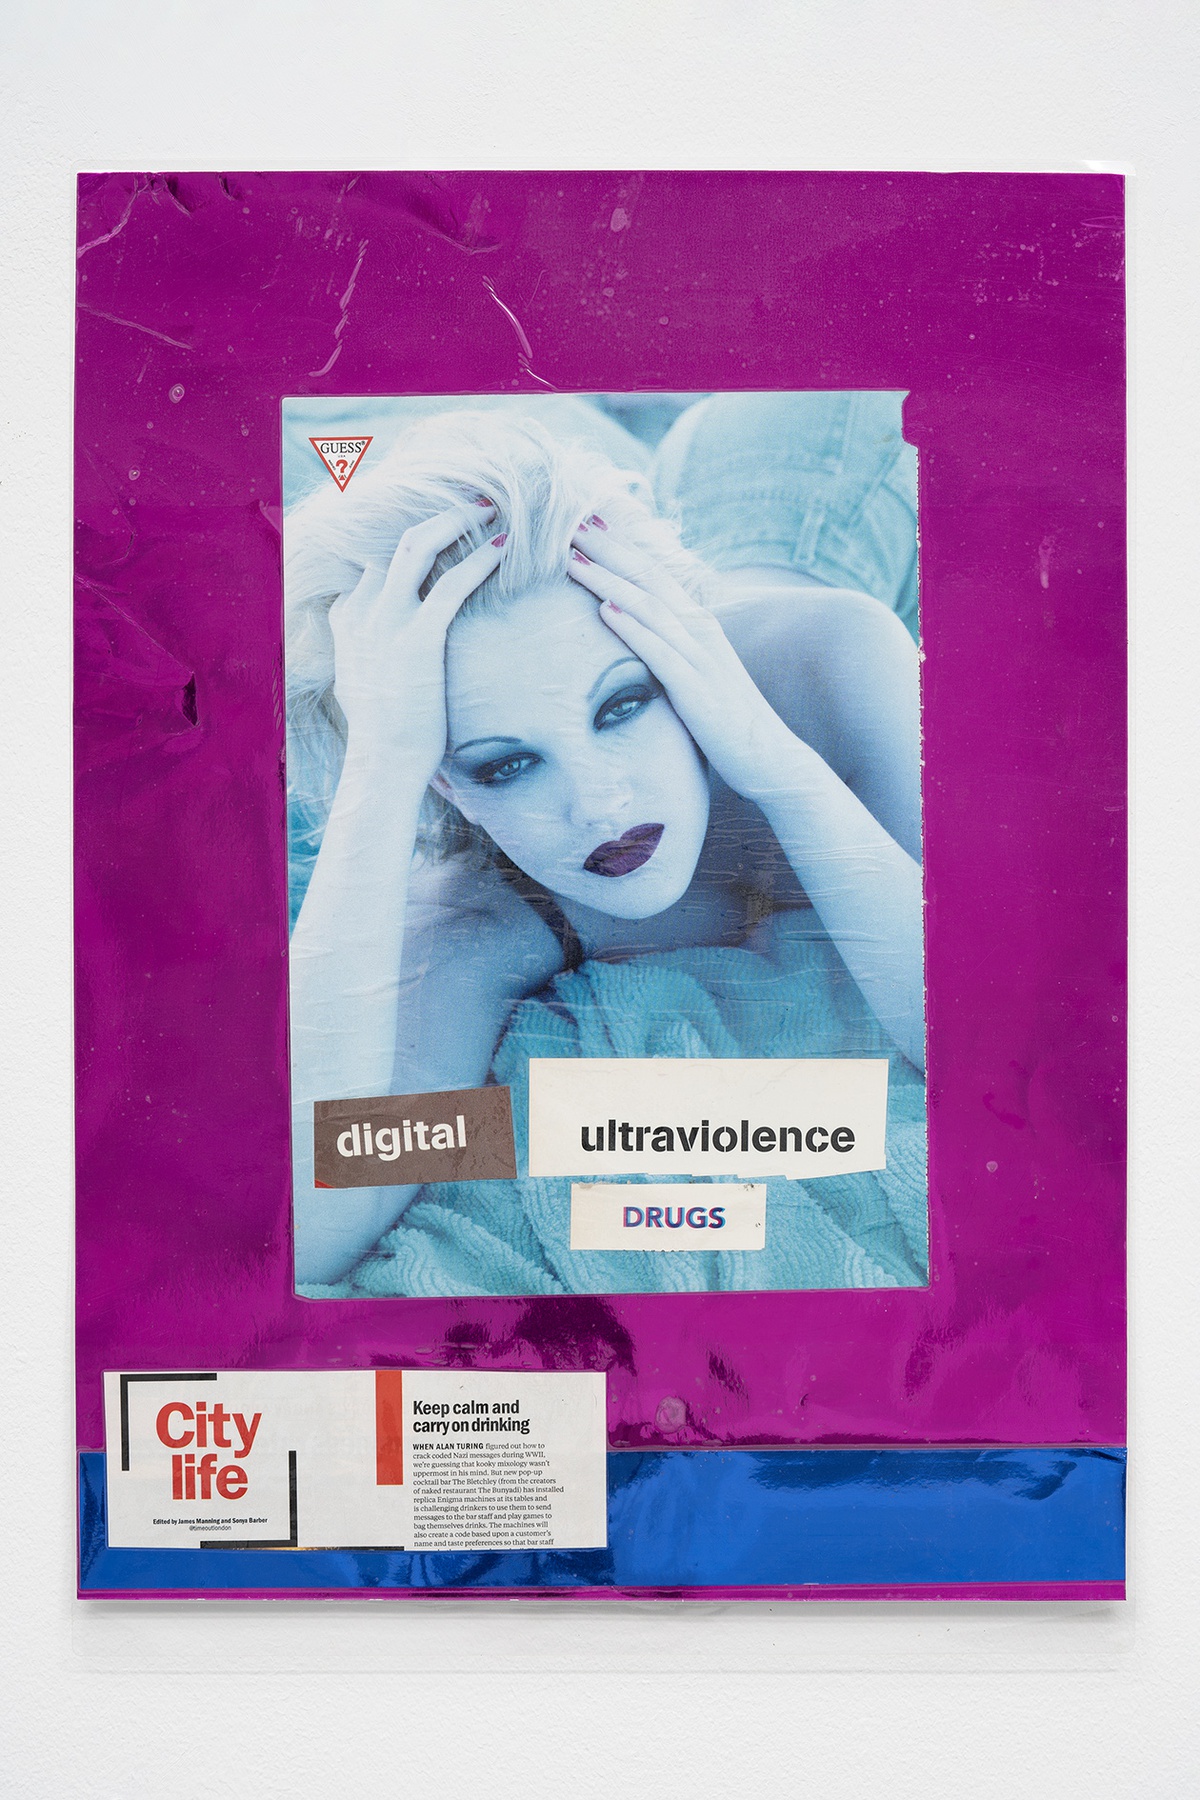 Richard Sides, Untitled (Drew Barrymore digital ultraviolence DRUGS City life Keep calm...)’, 2018laminated mixed media60 x 42,5 cm